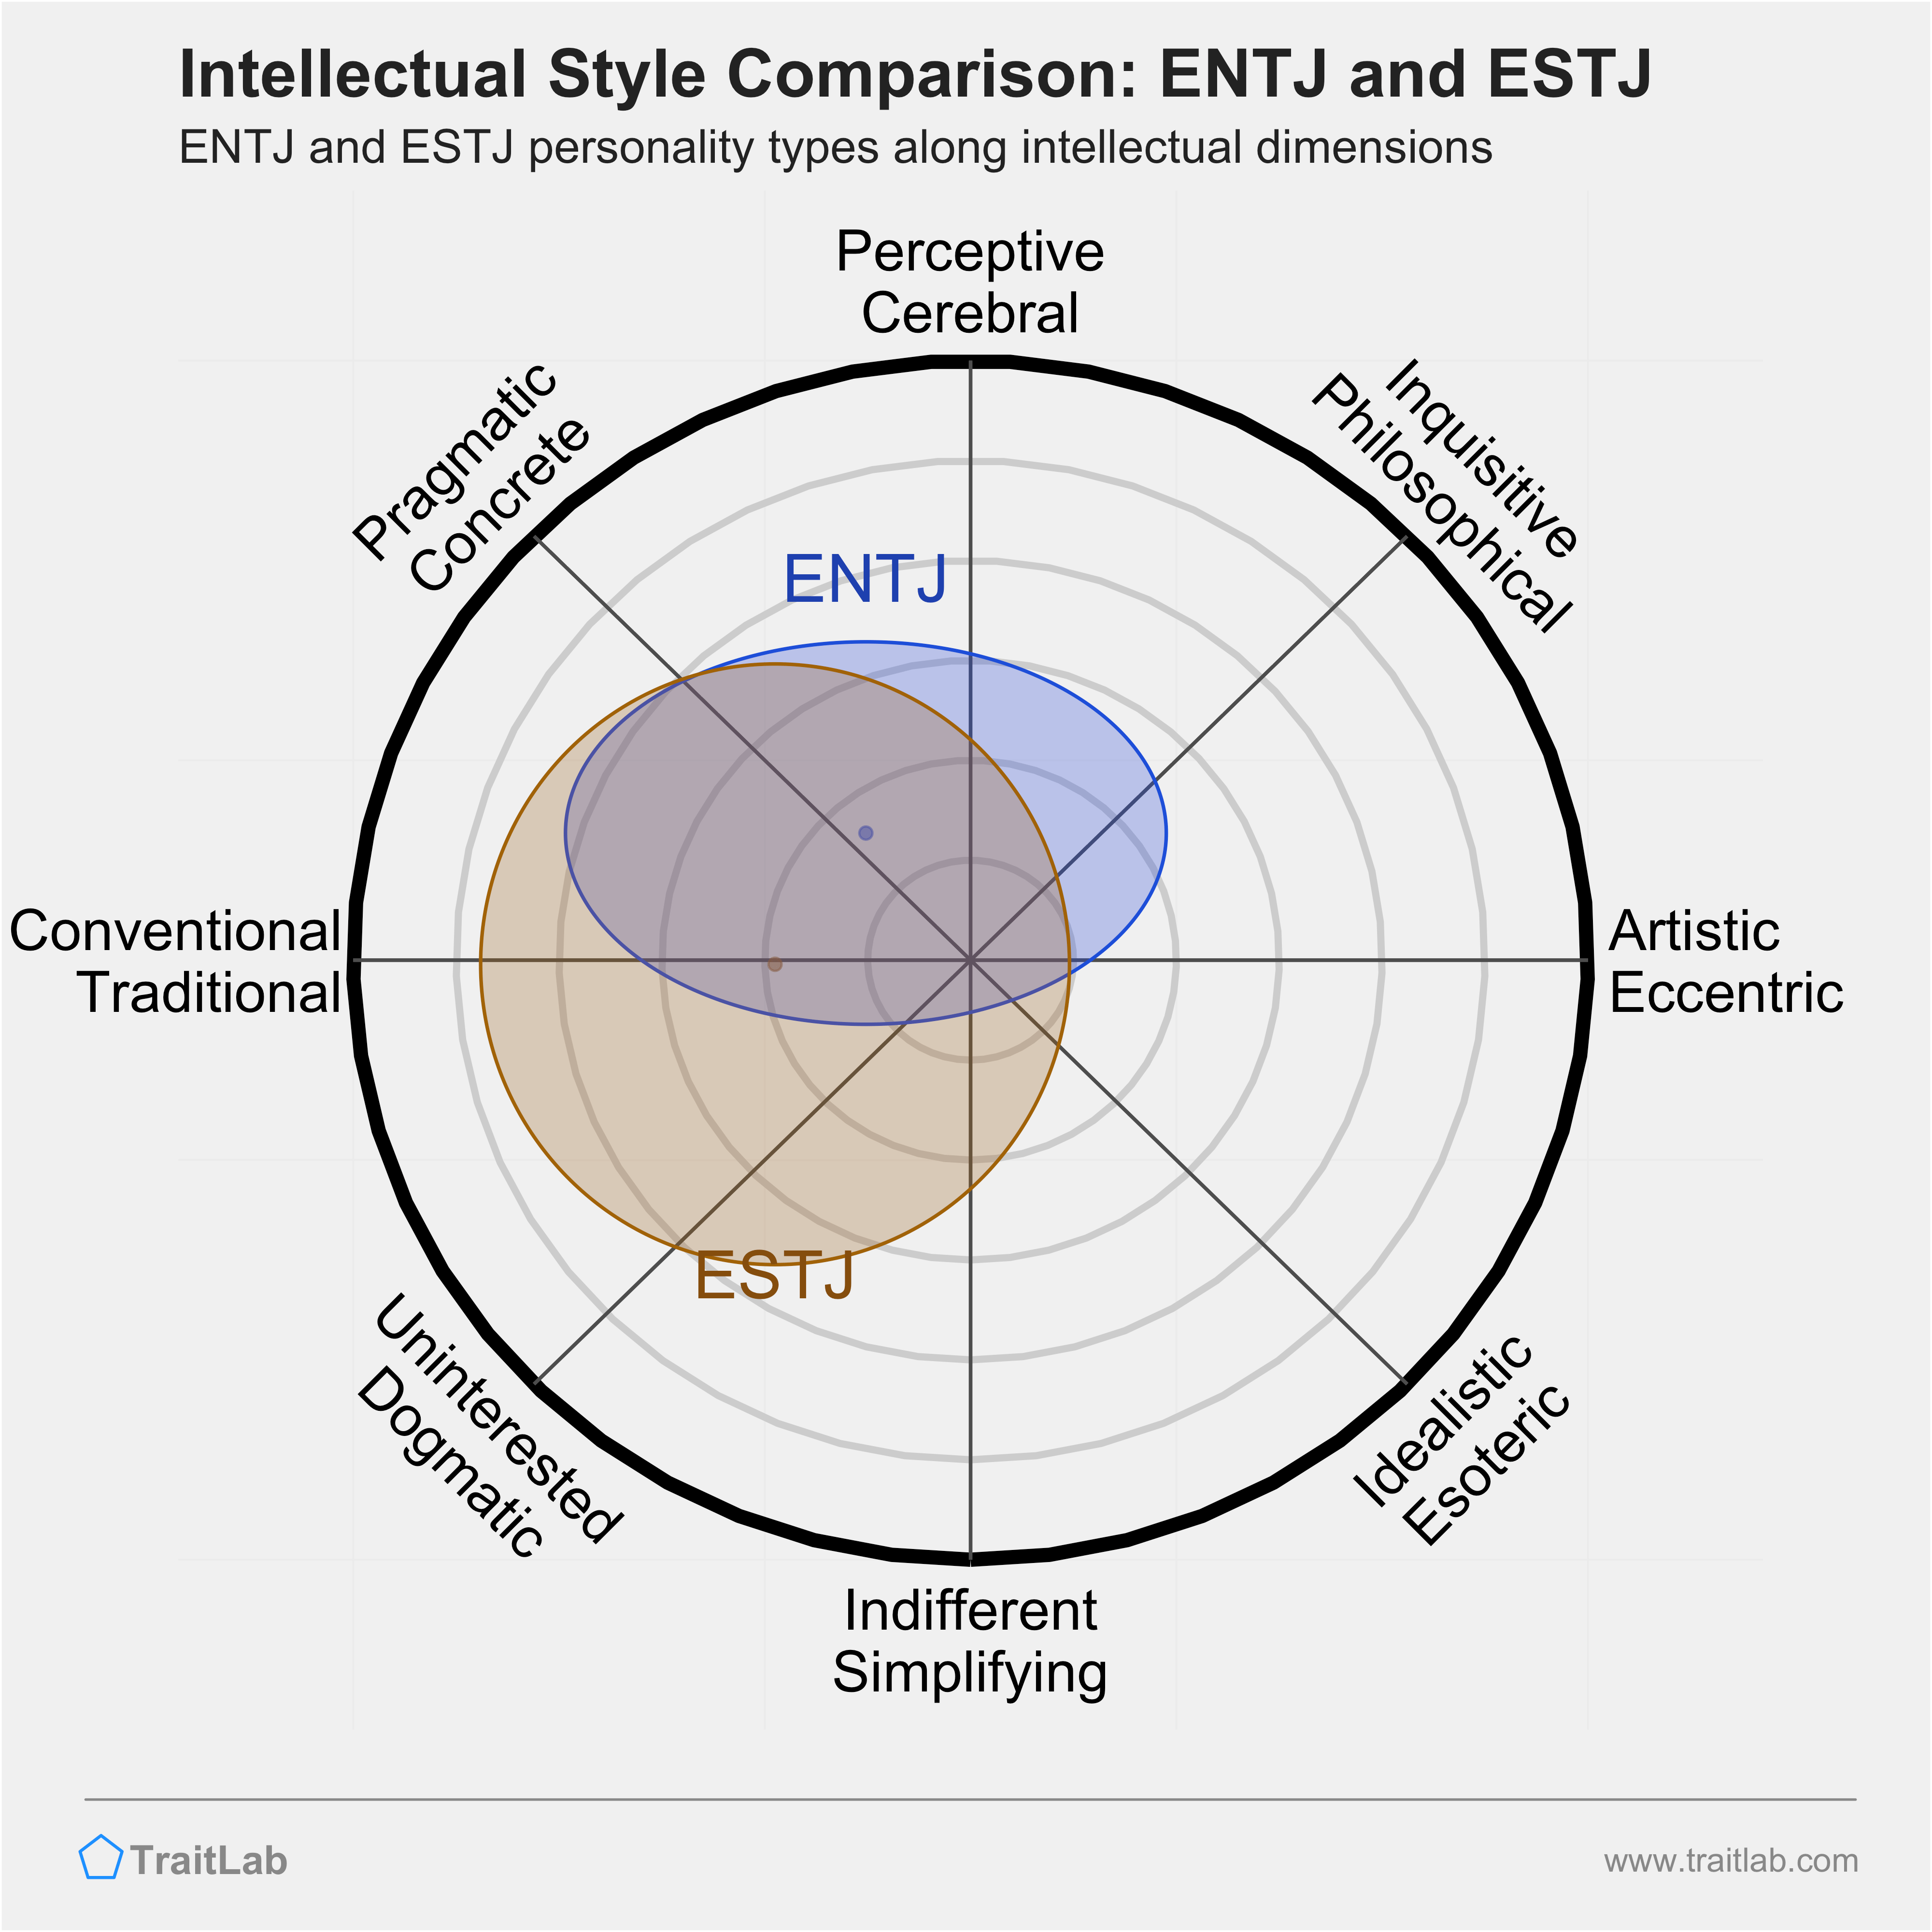 ENTJ and ESTJ comparison across intellectual dimensions